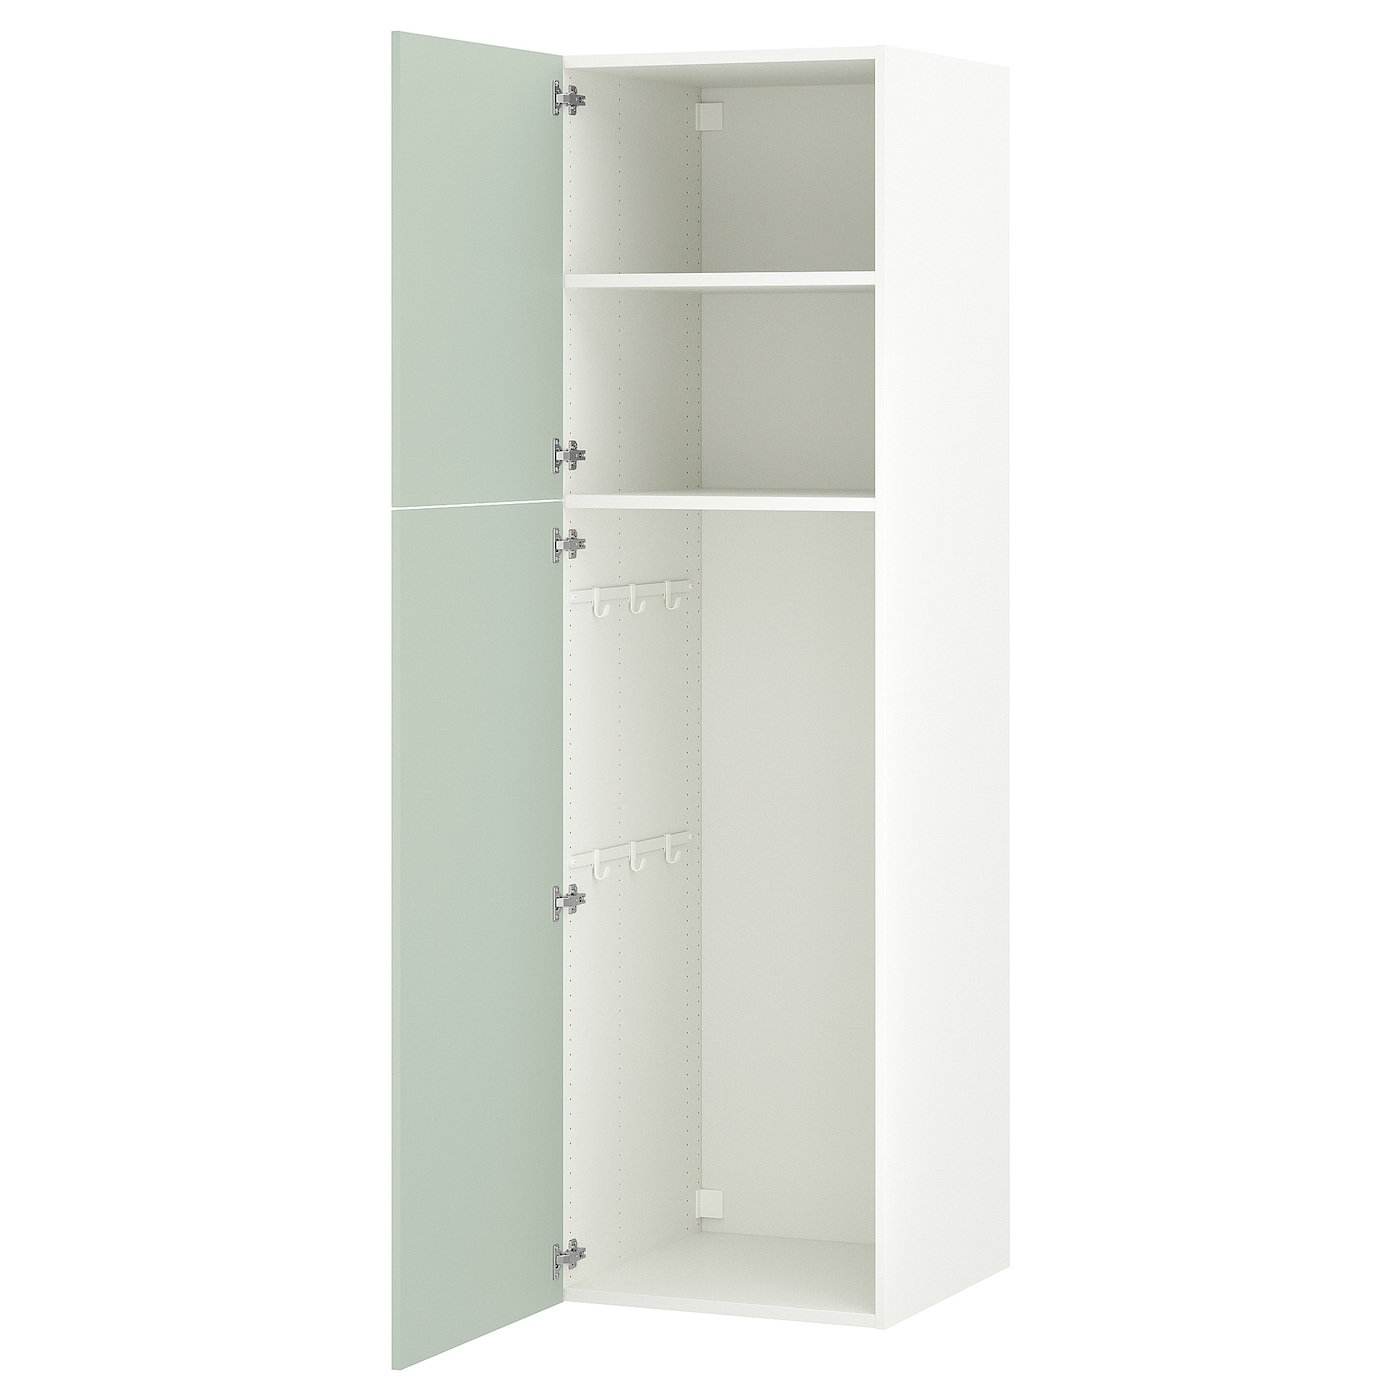 Книжный шкаф -  ENHET IKEA/ ЭНХЕТ ИКЕА, 210х60 см, белый/зеленый